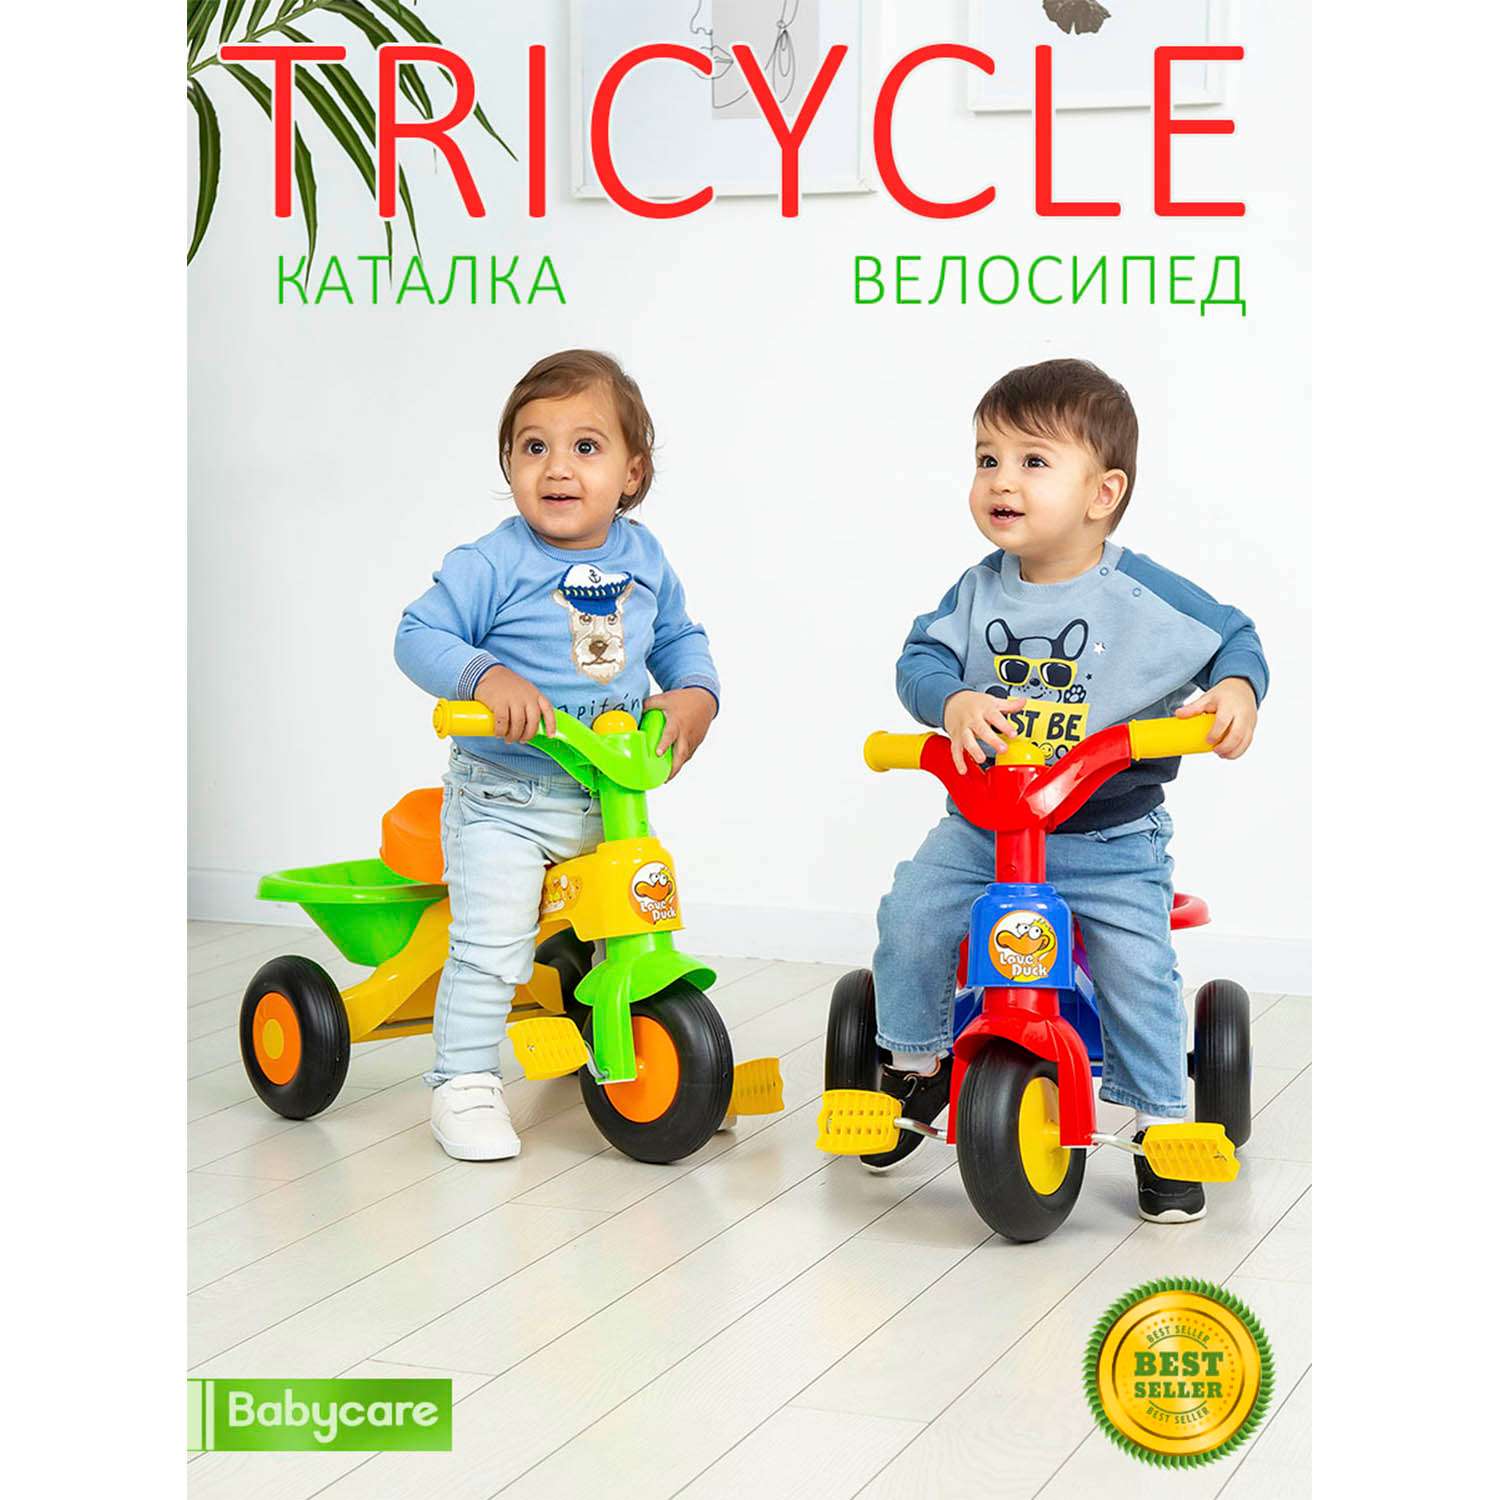 Велосипед трехколесный BabyCare Tricycle синий - фото 6